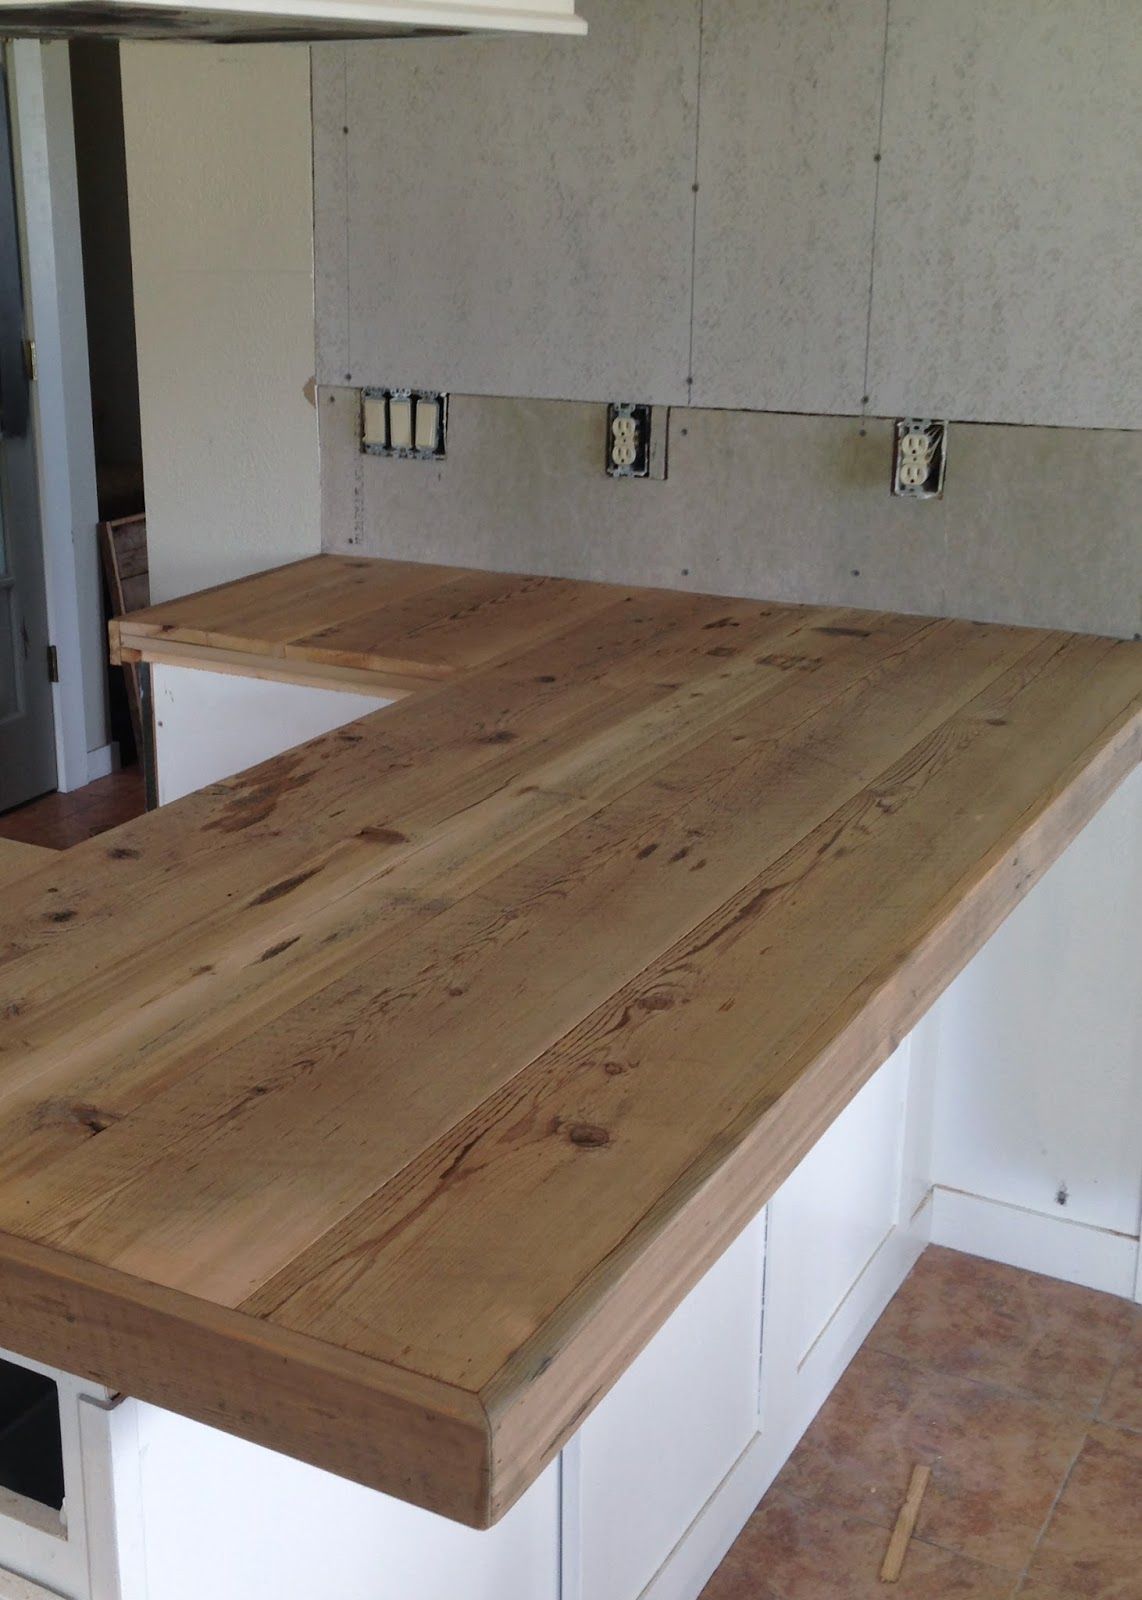 DIY Reclaimed Wood Countertop - adding trim boards along edge #diy_kitchen_worktop